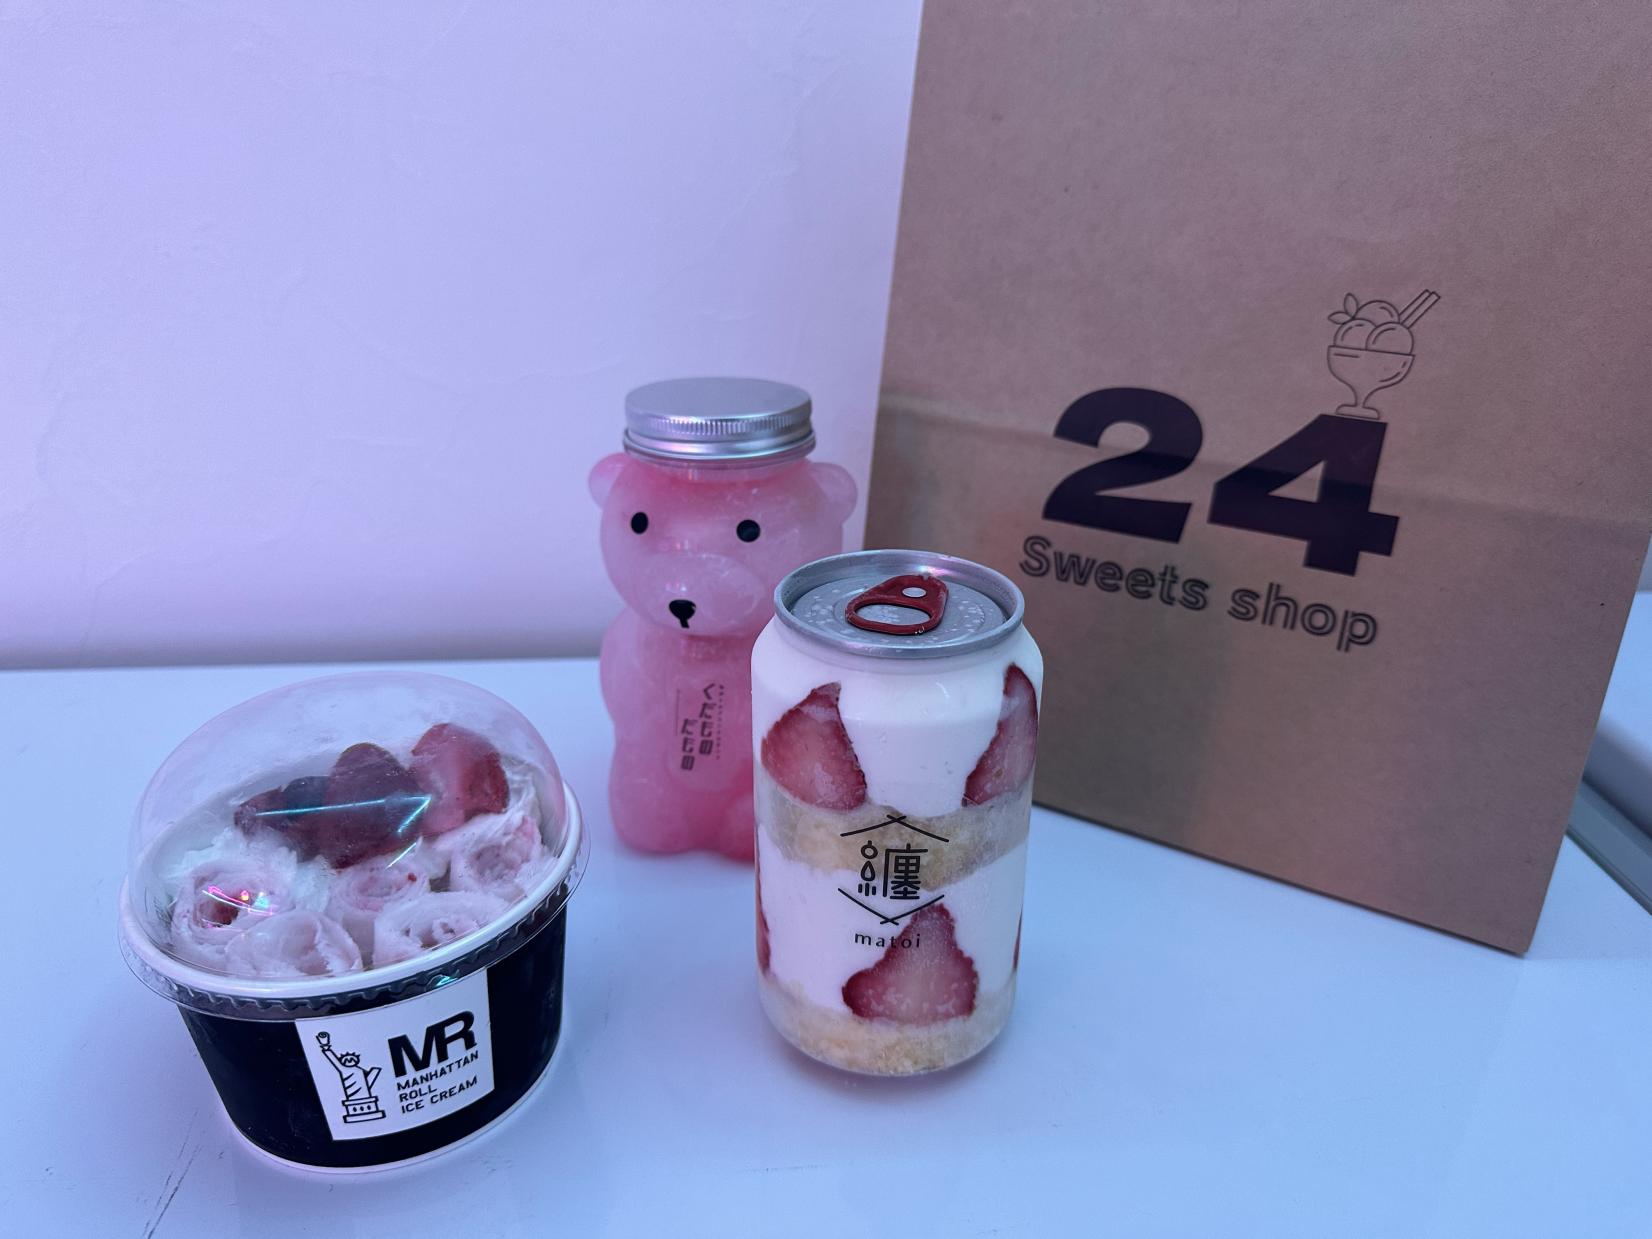 24weets shop 伊勢店-2